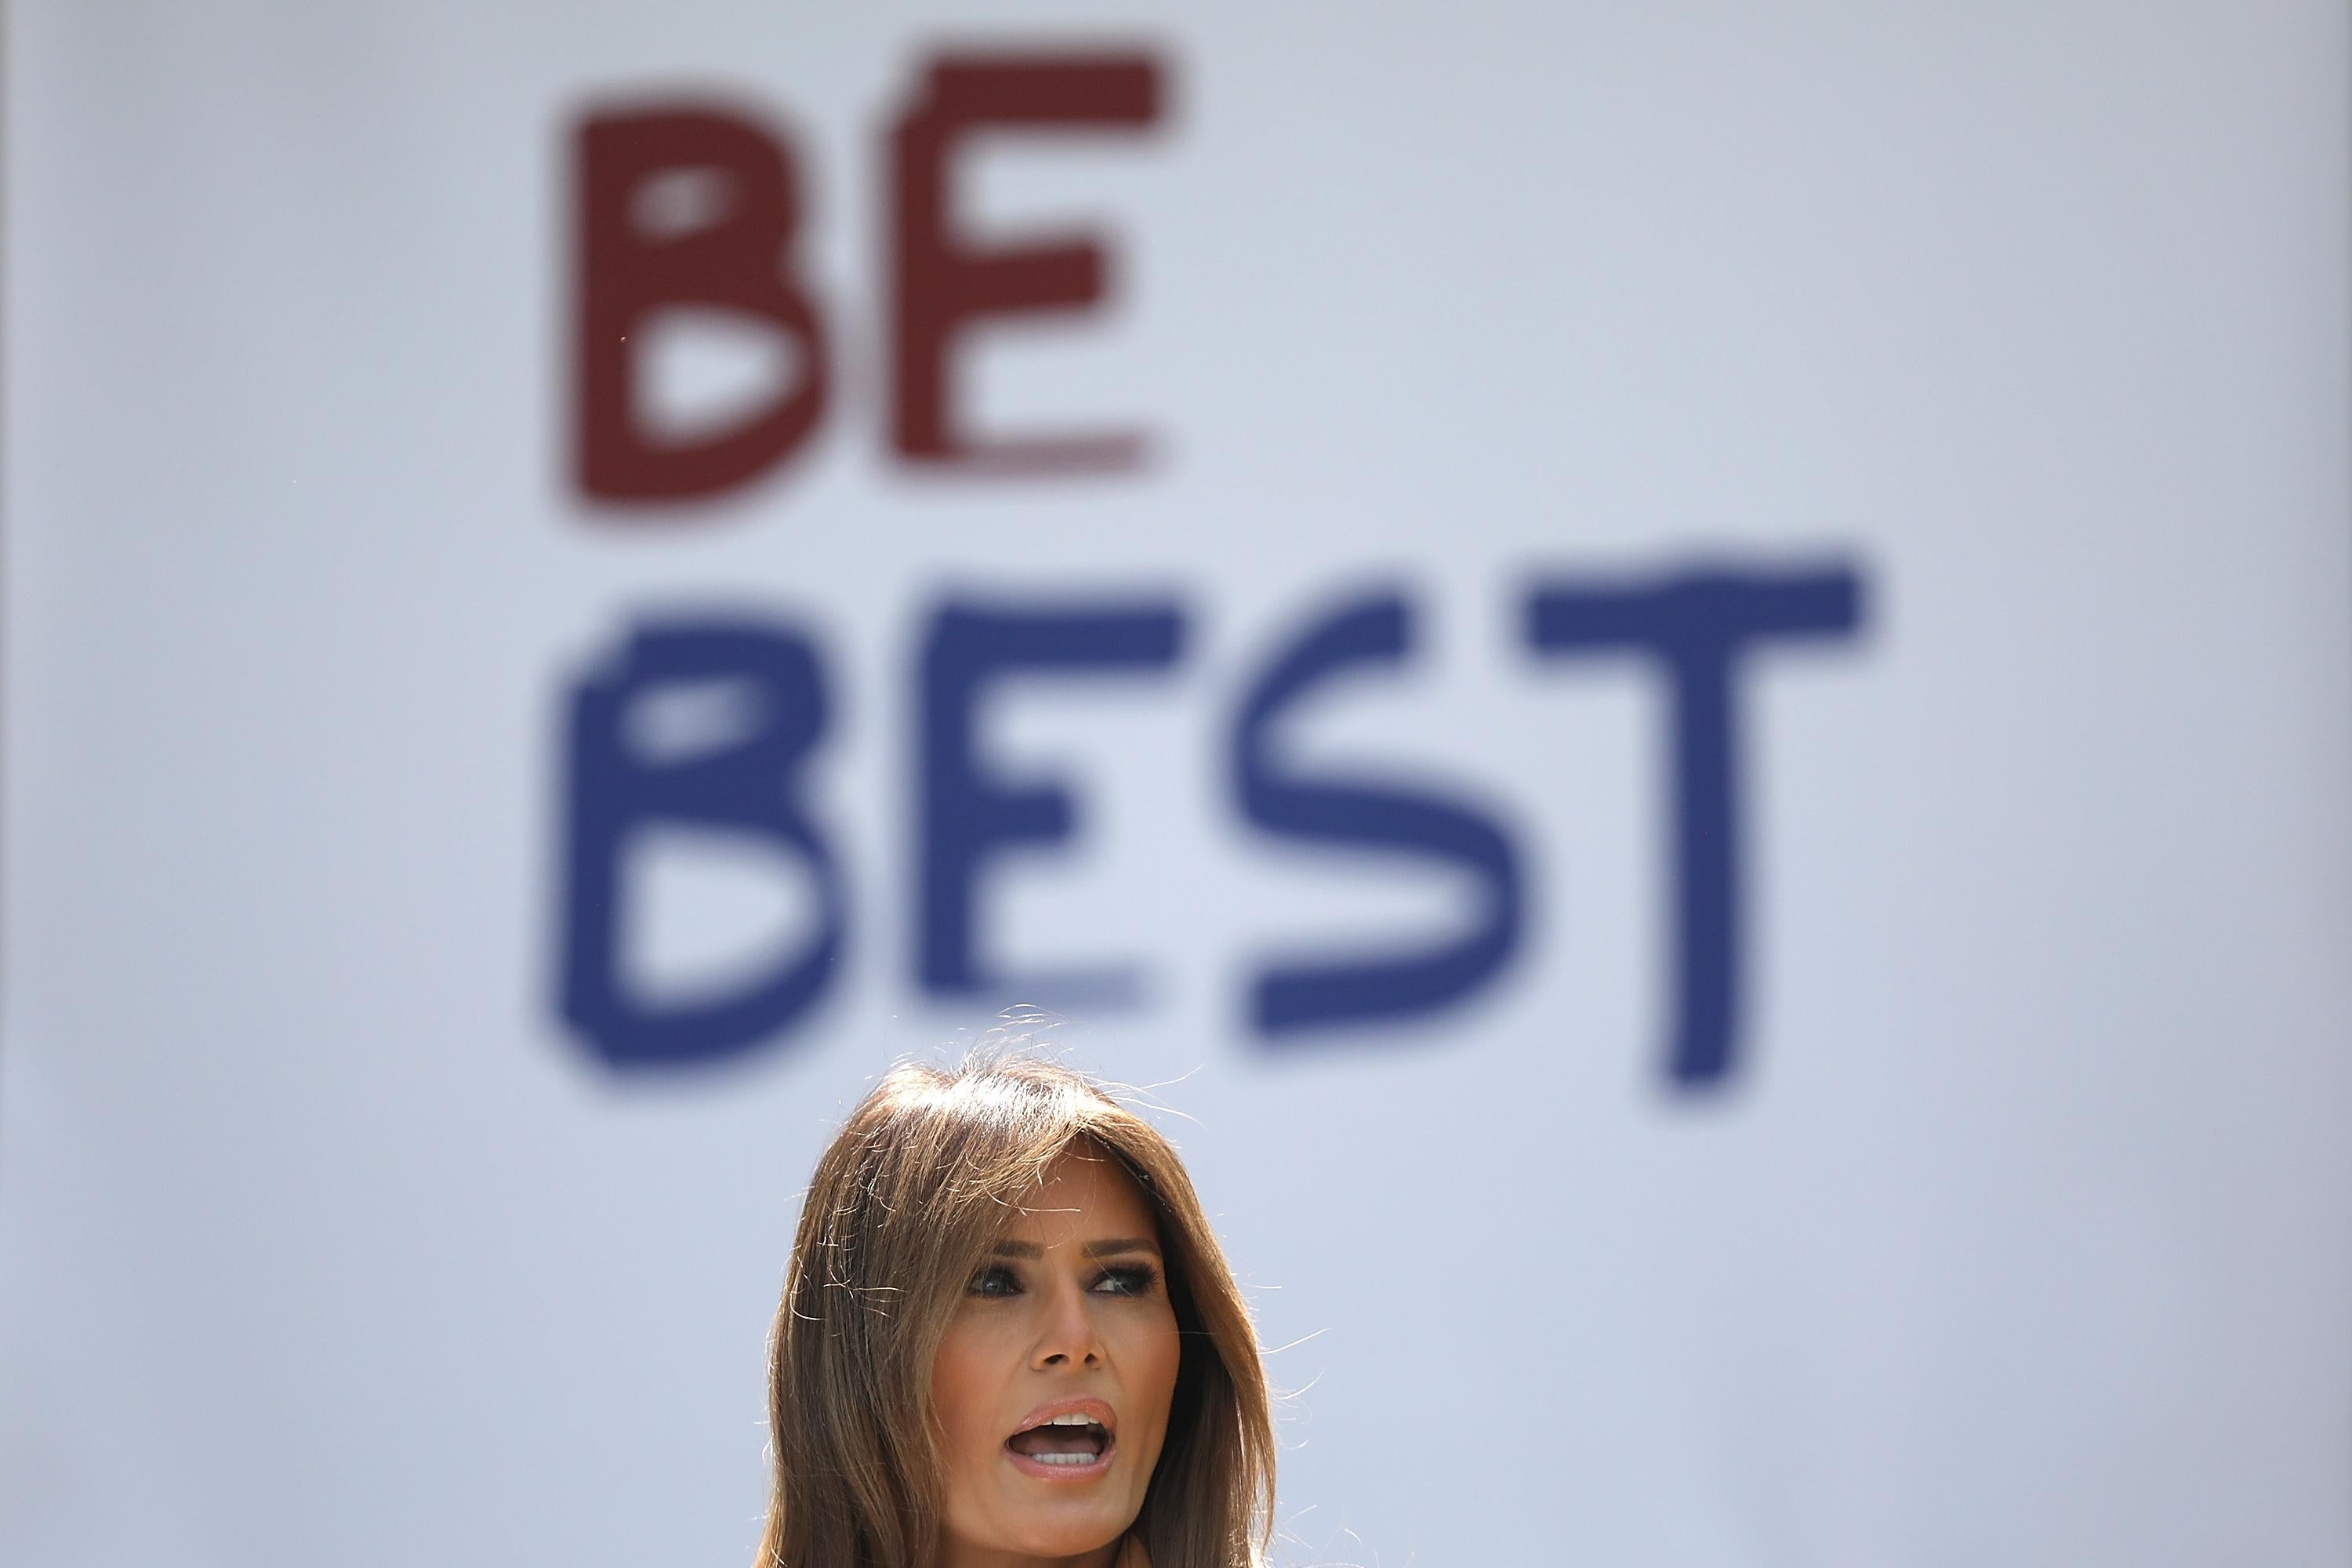 A "Be Best" poster is seen behind Melania Trump’s head.